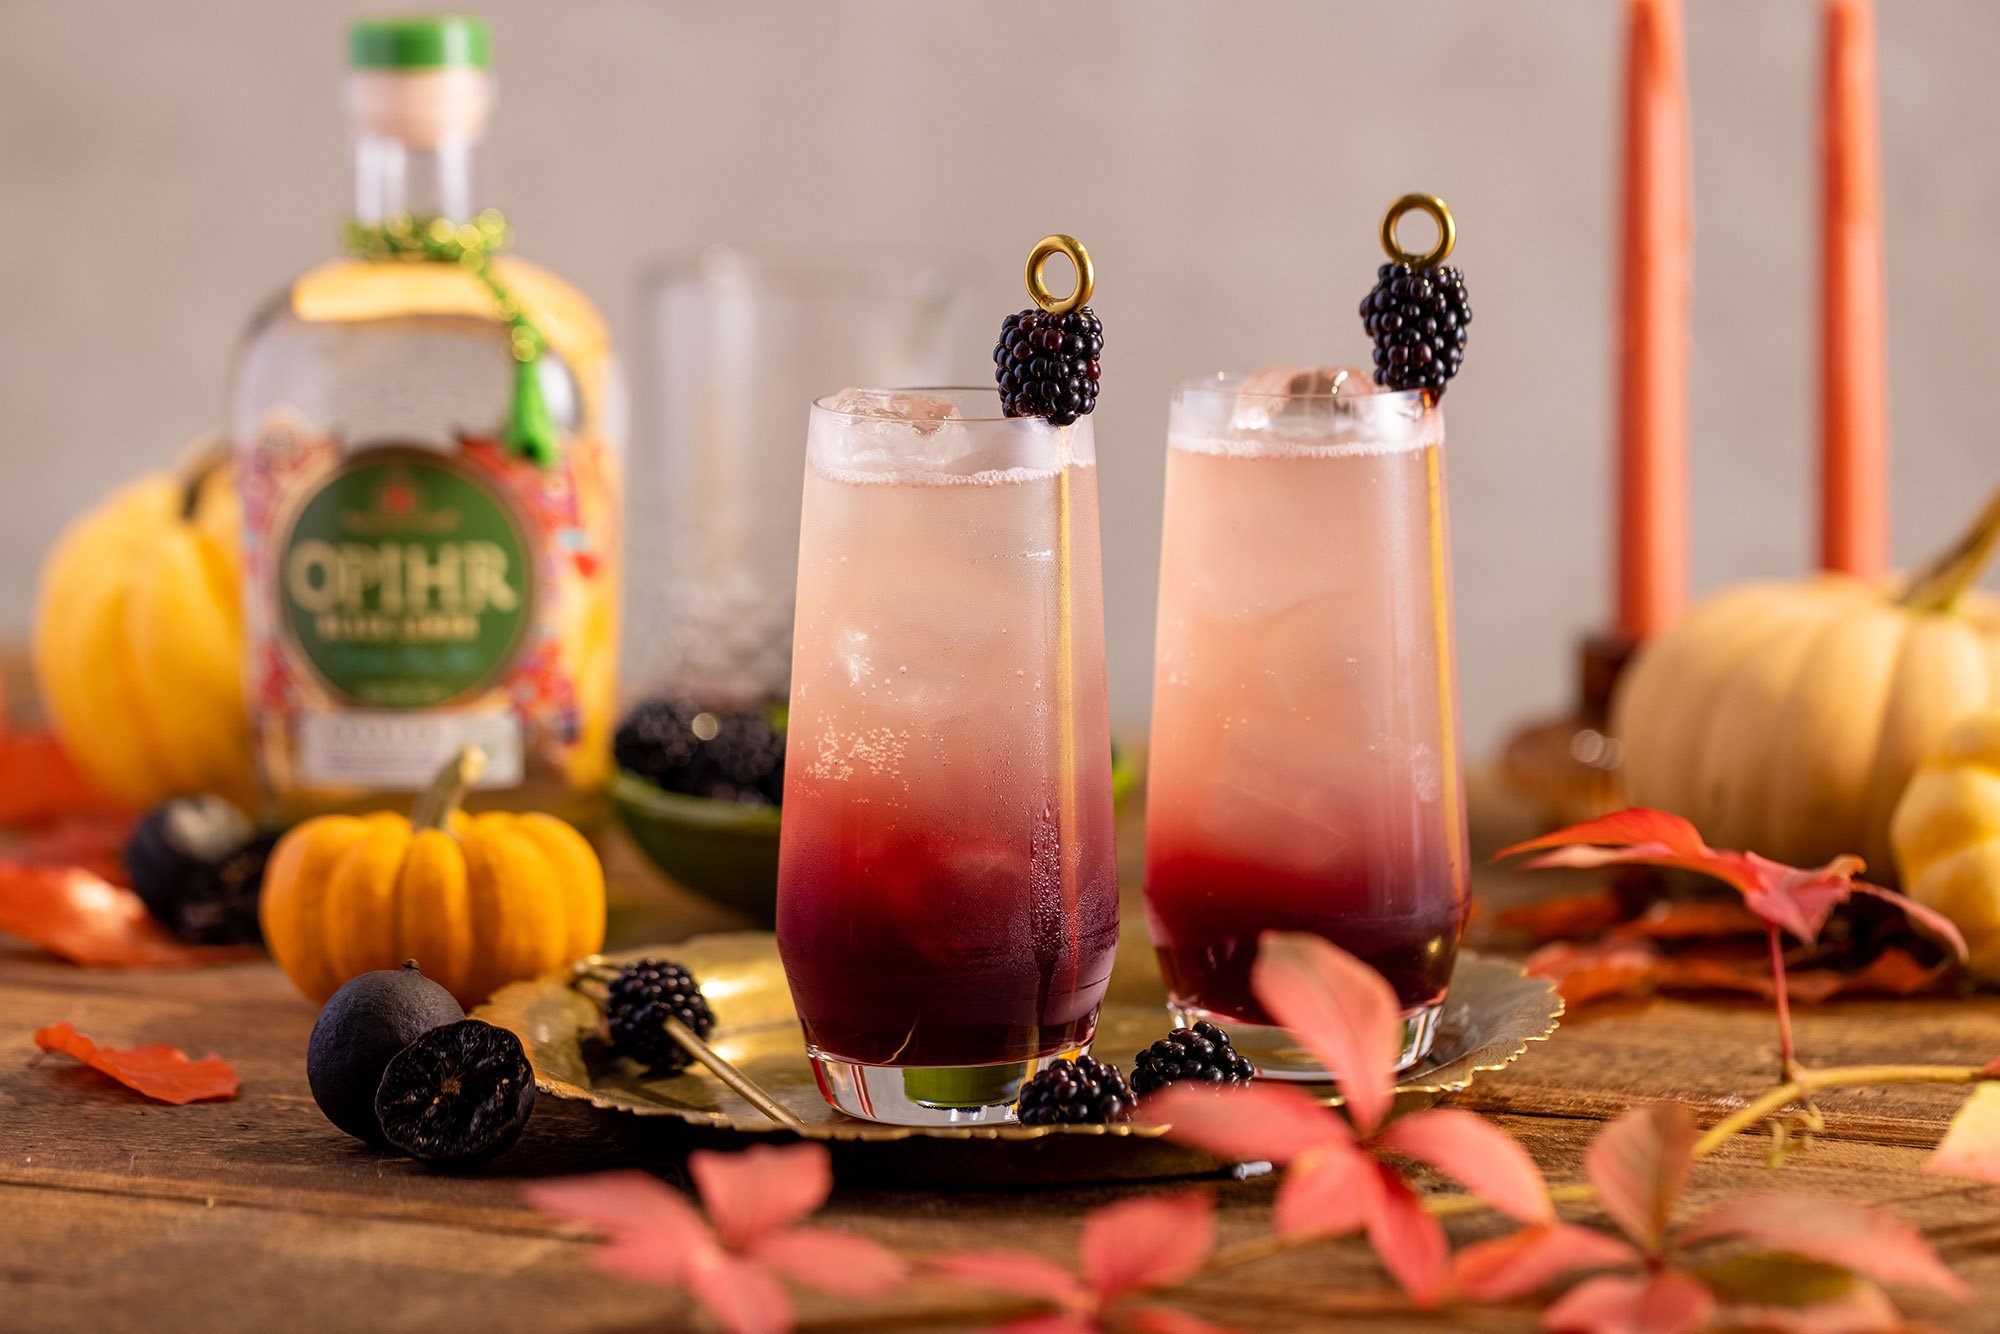 Ophir Black Lemon Widow Halloween Cocktail 